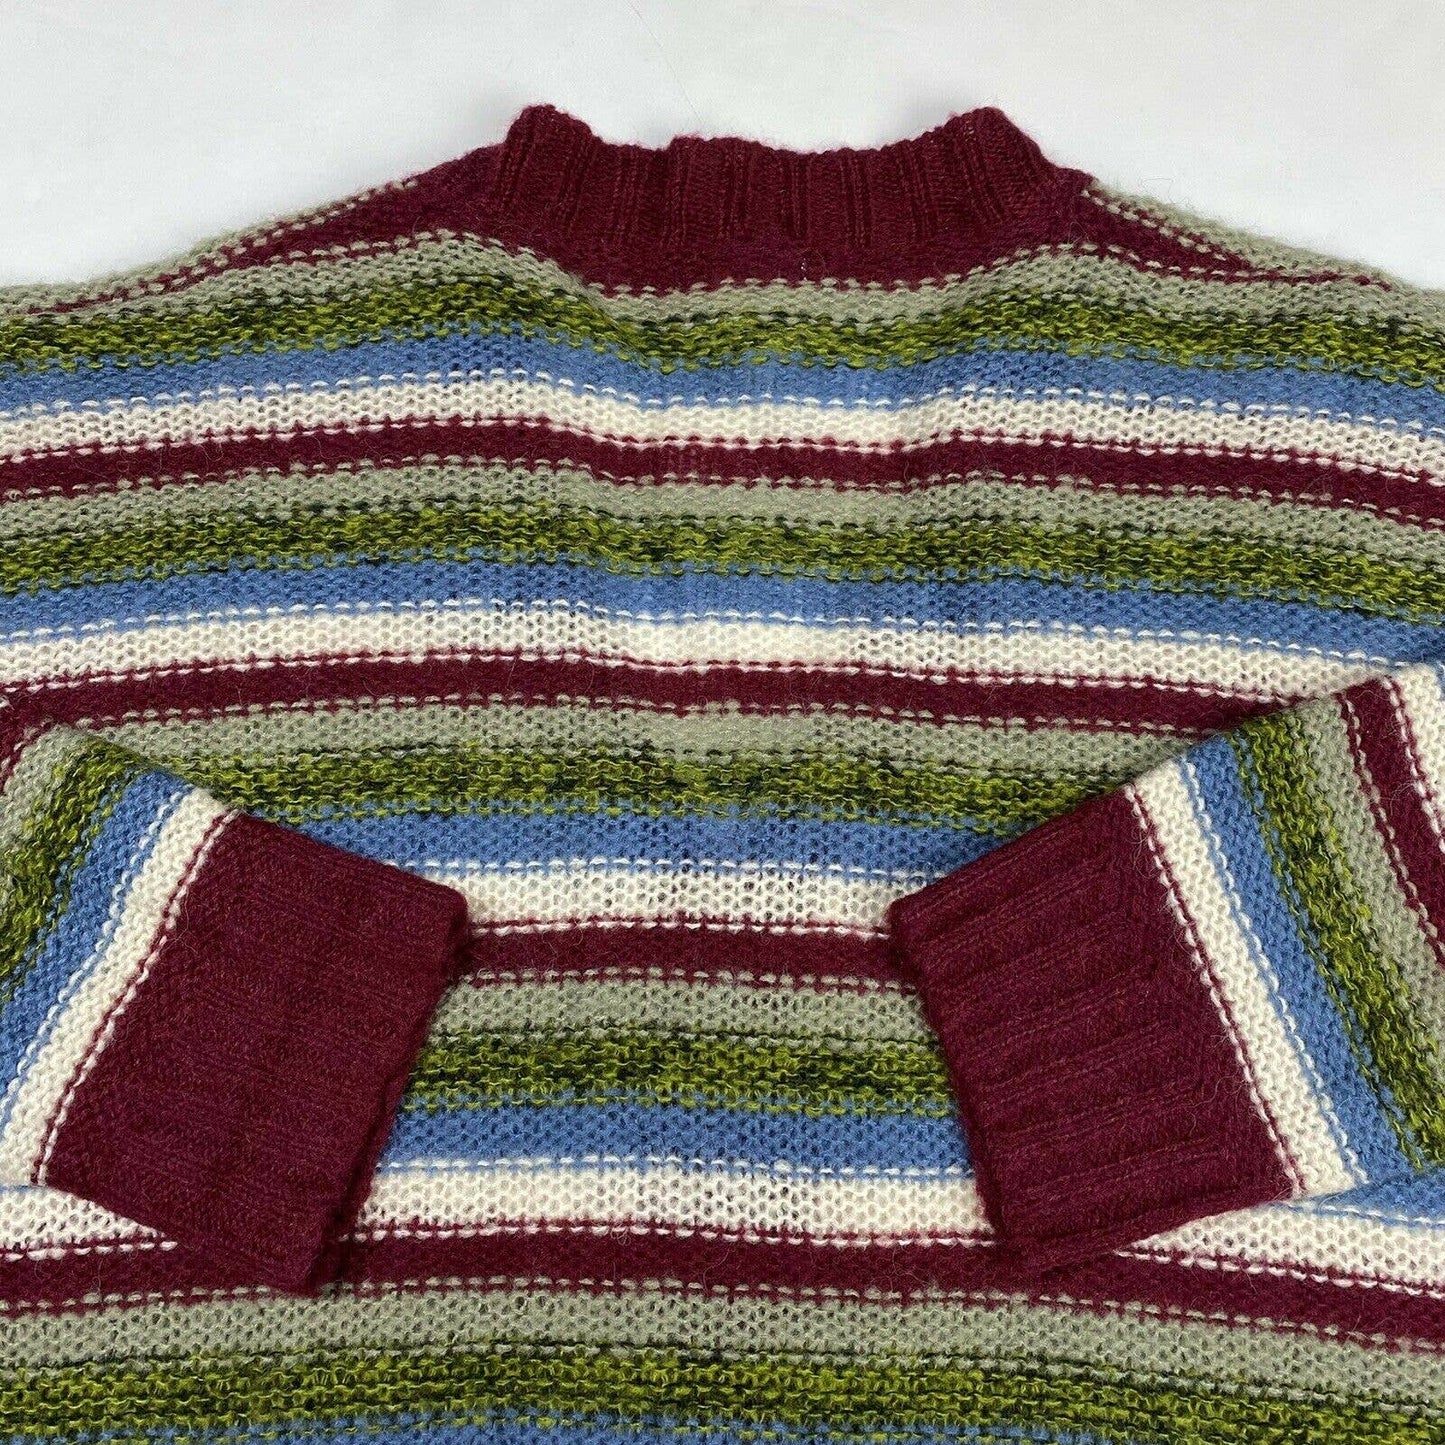 Easel Los Angeles Wool Blend Cardigan Sz Large Boho Oversized Soft Cozy Sweater